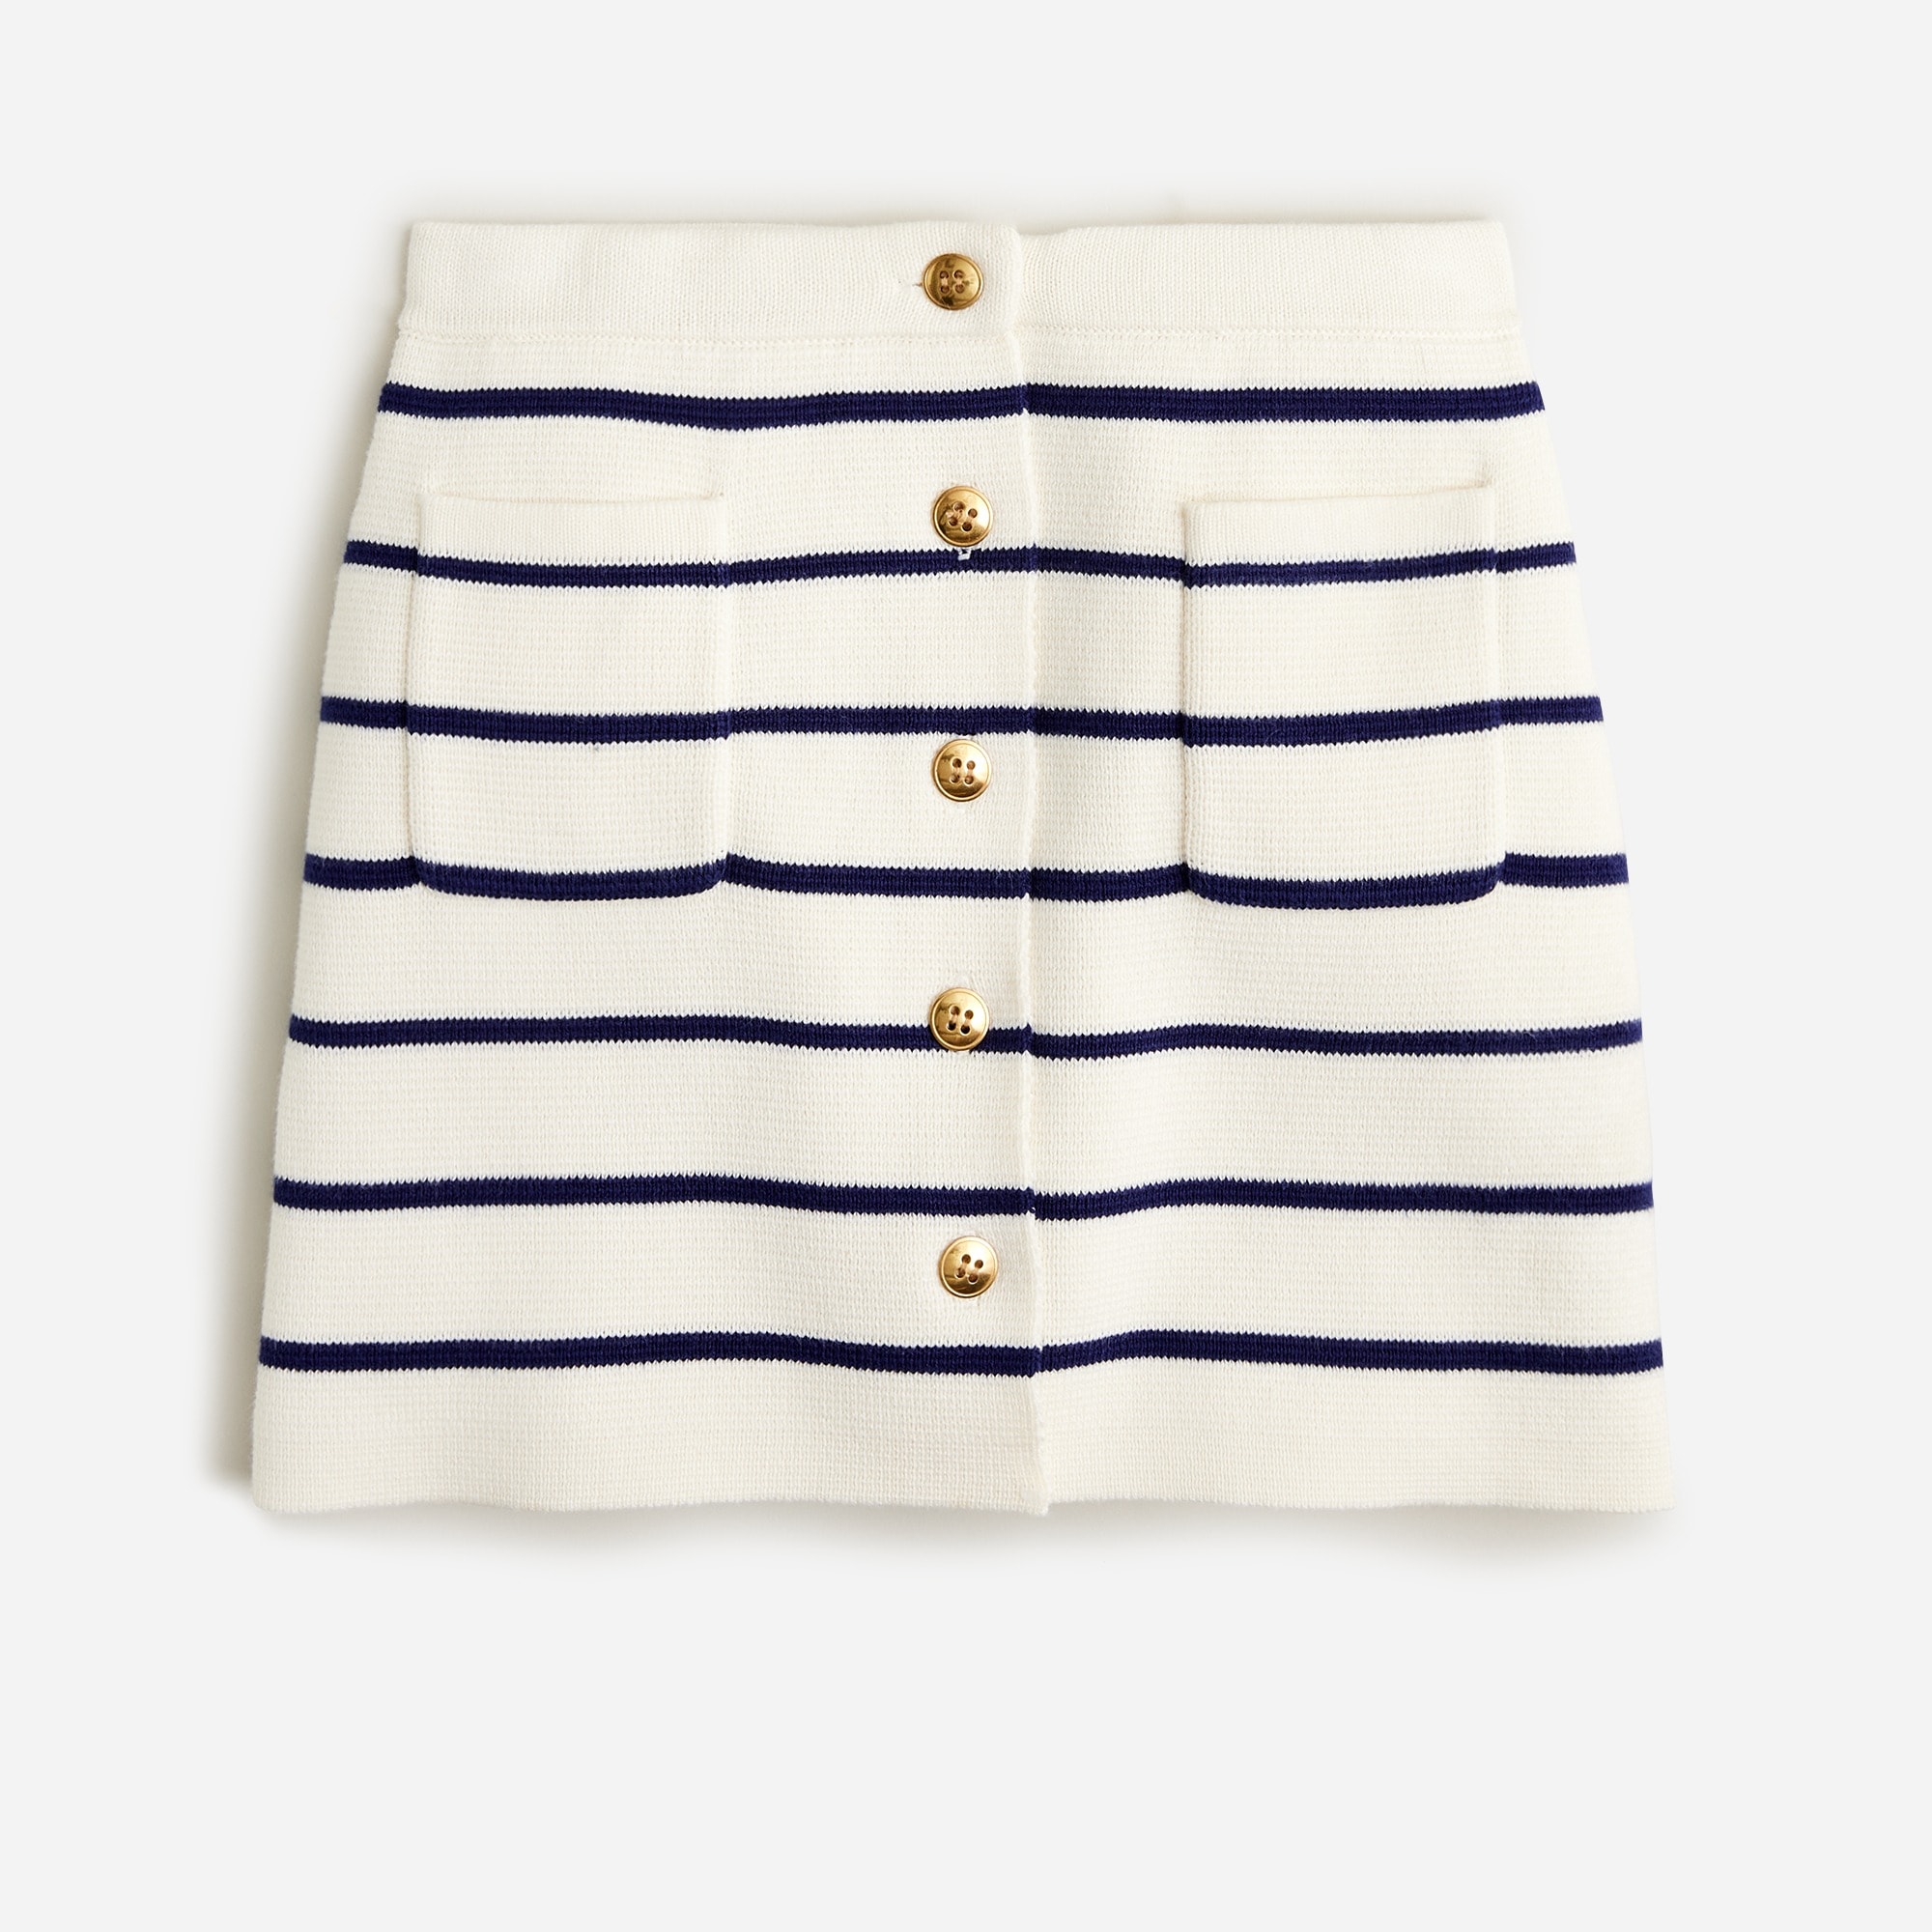  Girls' sweater-skirt in stripe